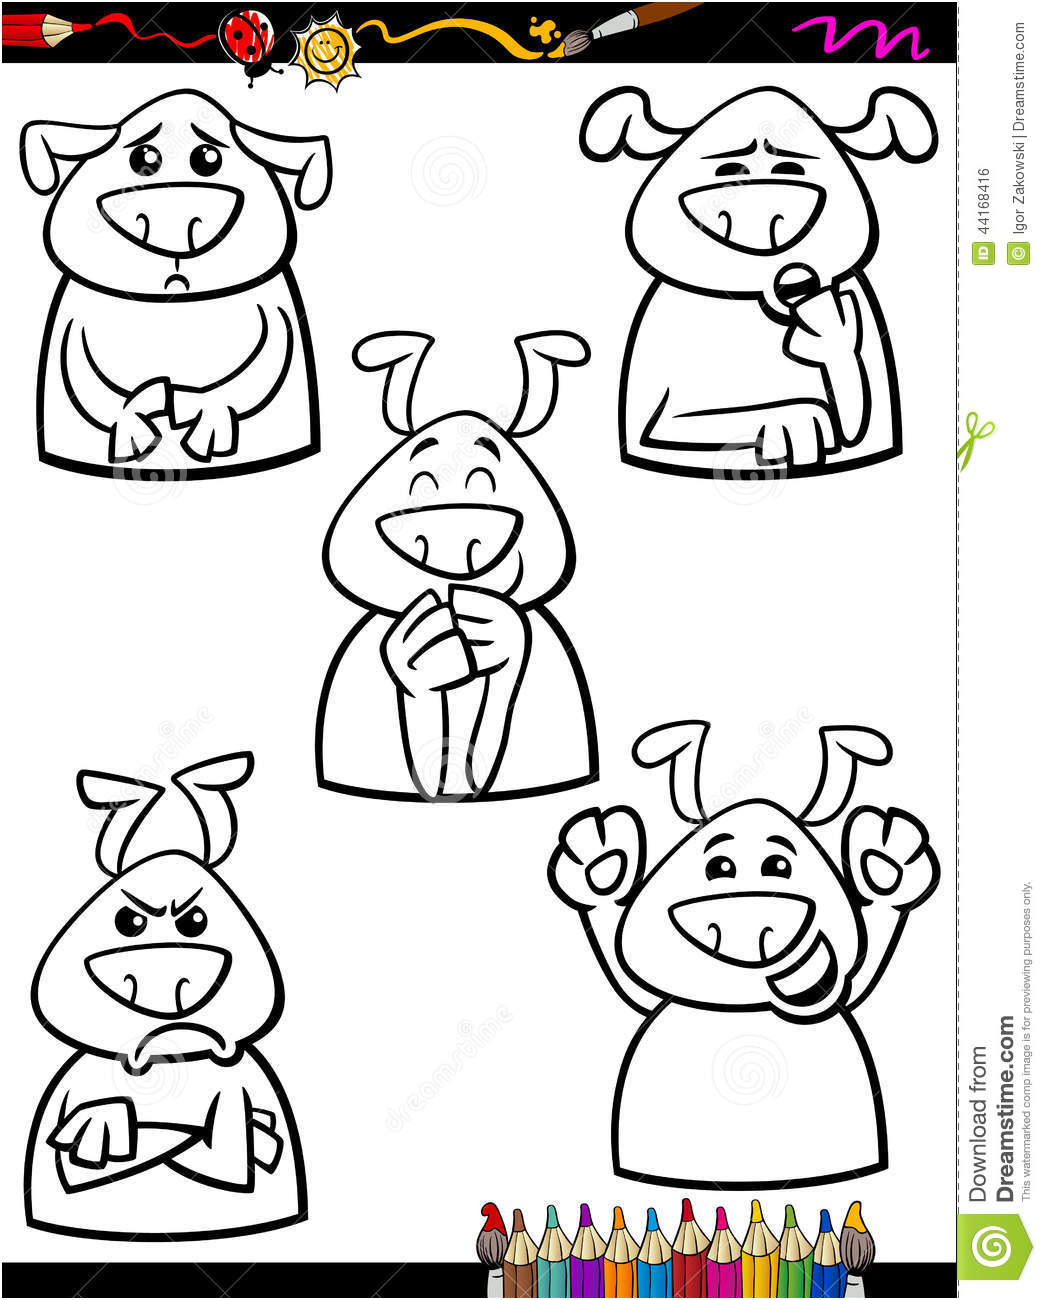 stock illustration dog emotion set cartoon coloring book page illustration black white funny dogs expressing emotions children image